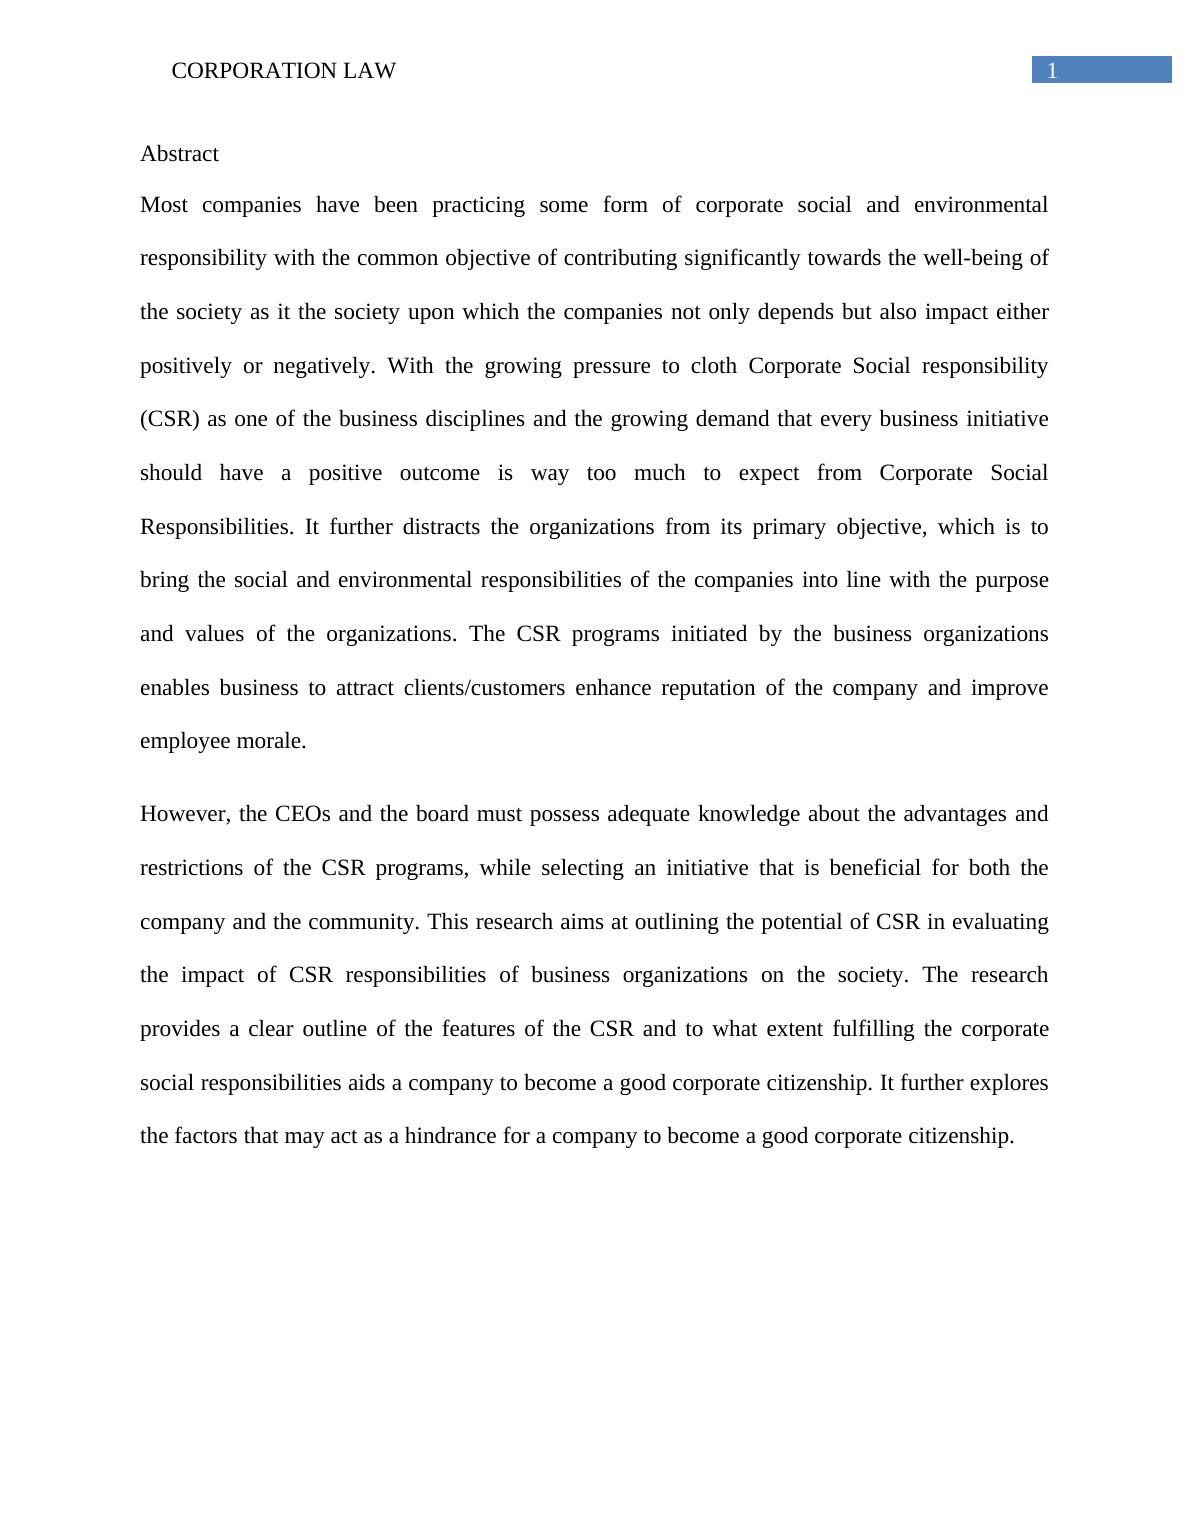 BTF5501 Corporations Law CSR Assignment_2